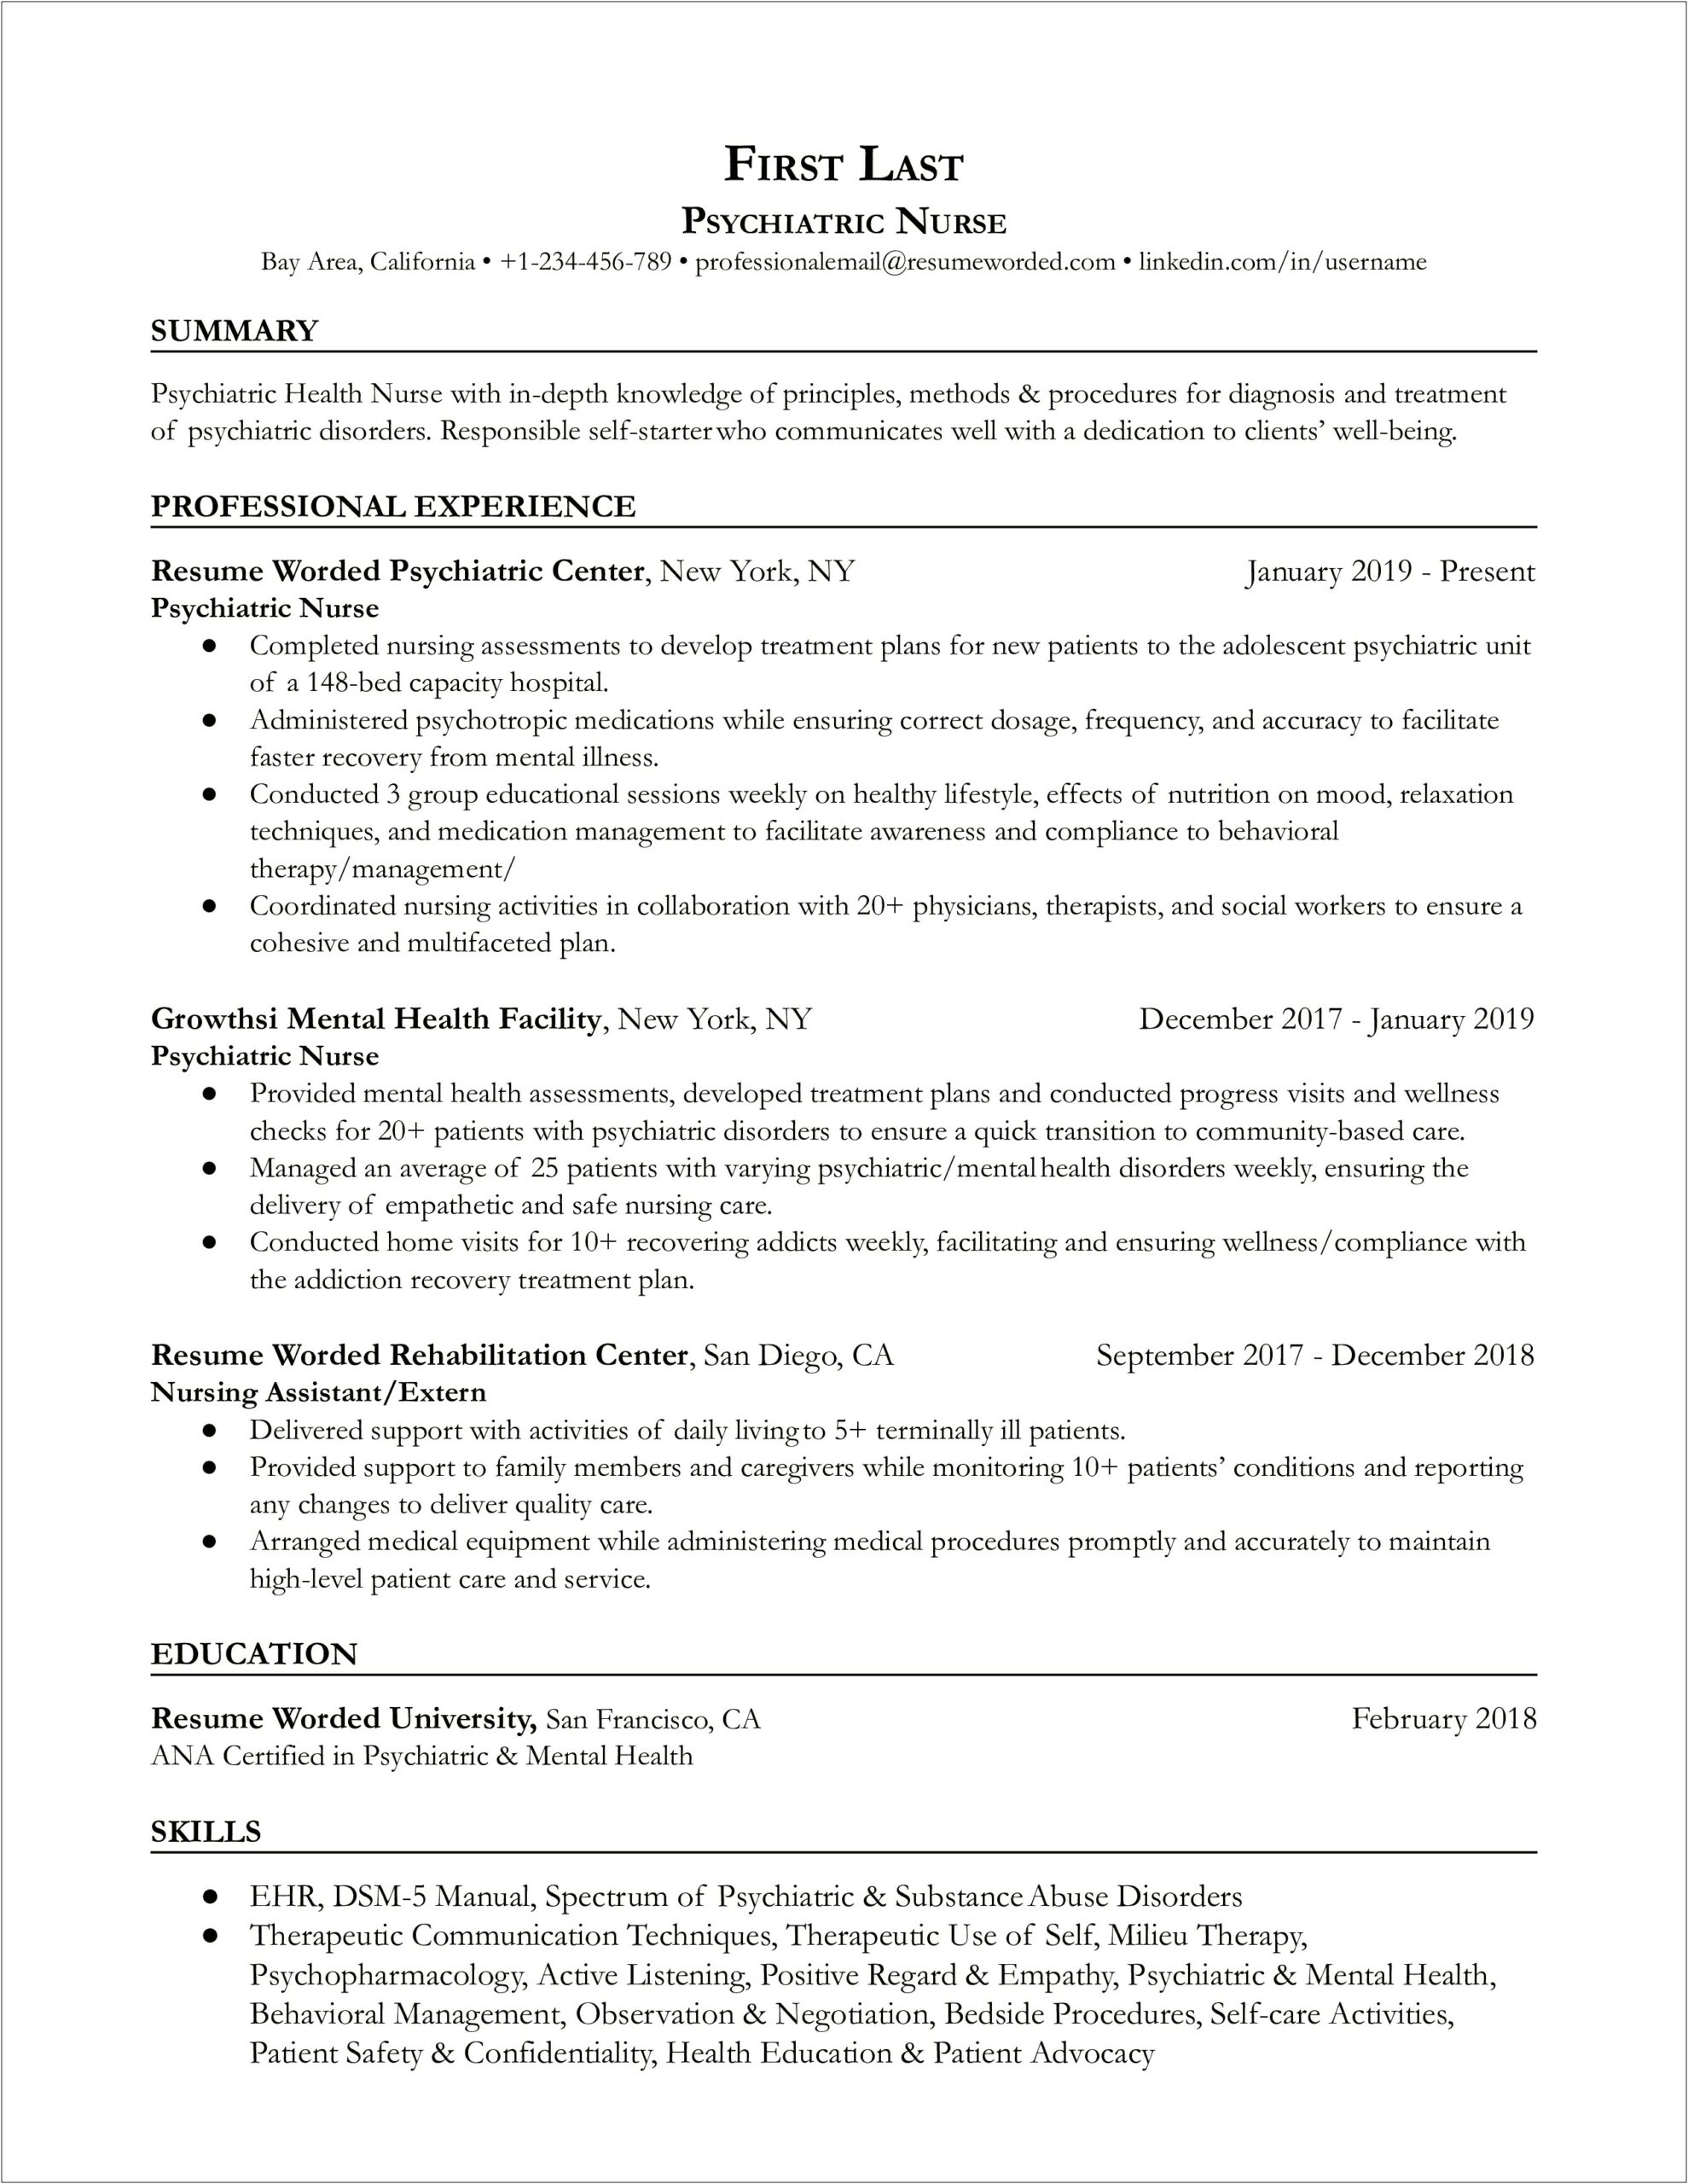 Nursing Mental Health Clinical Description Resume